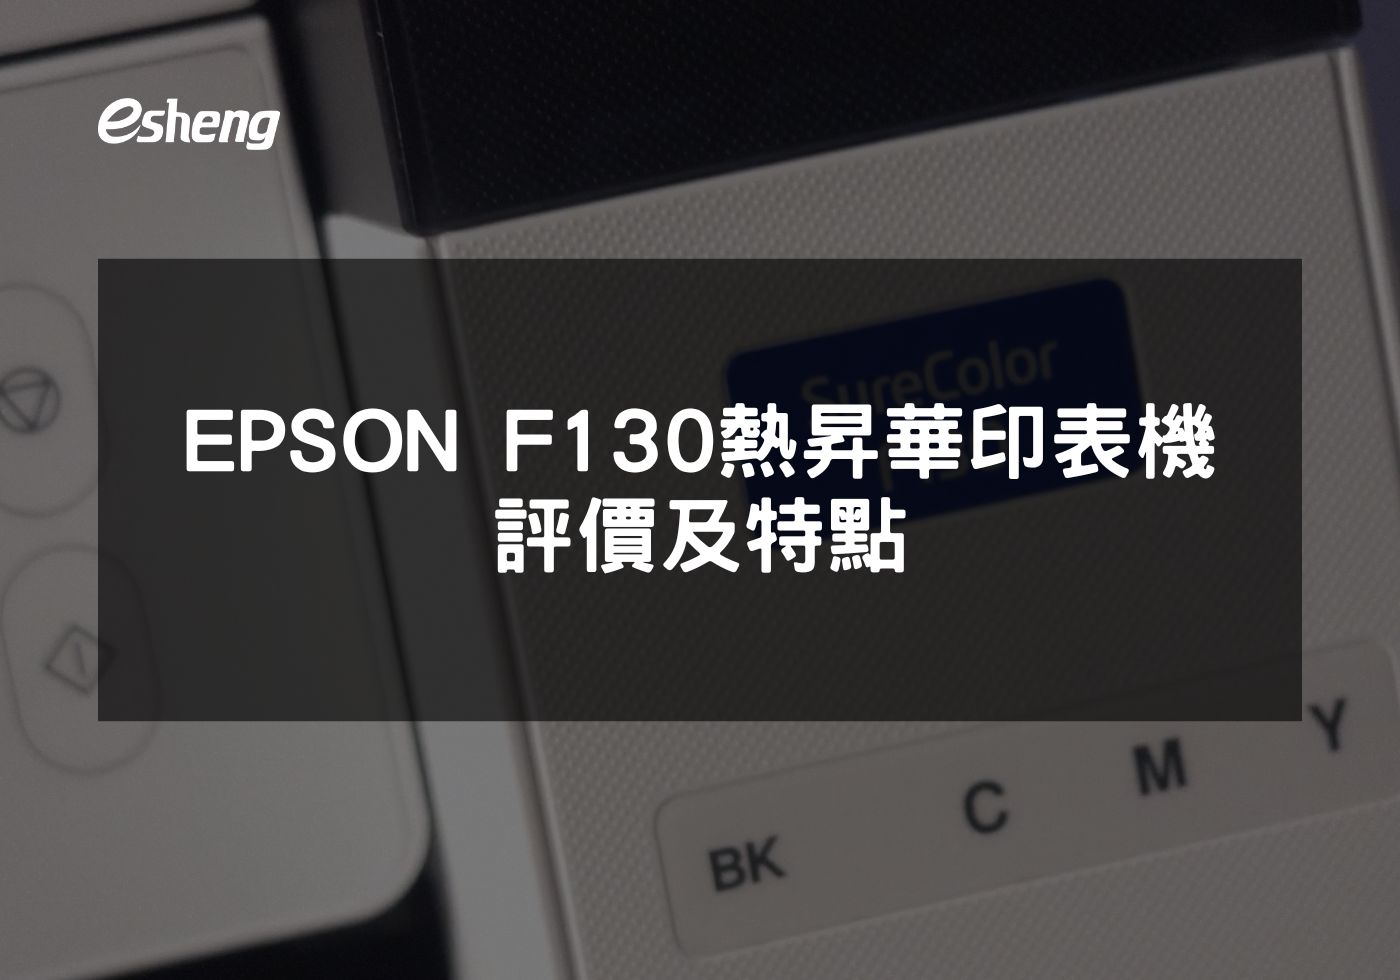 EPSON F130 熱昇華印表機評價及特點